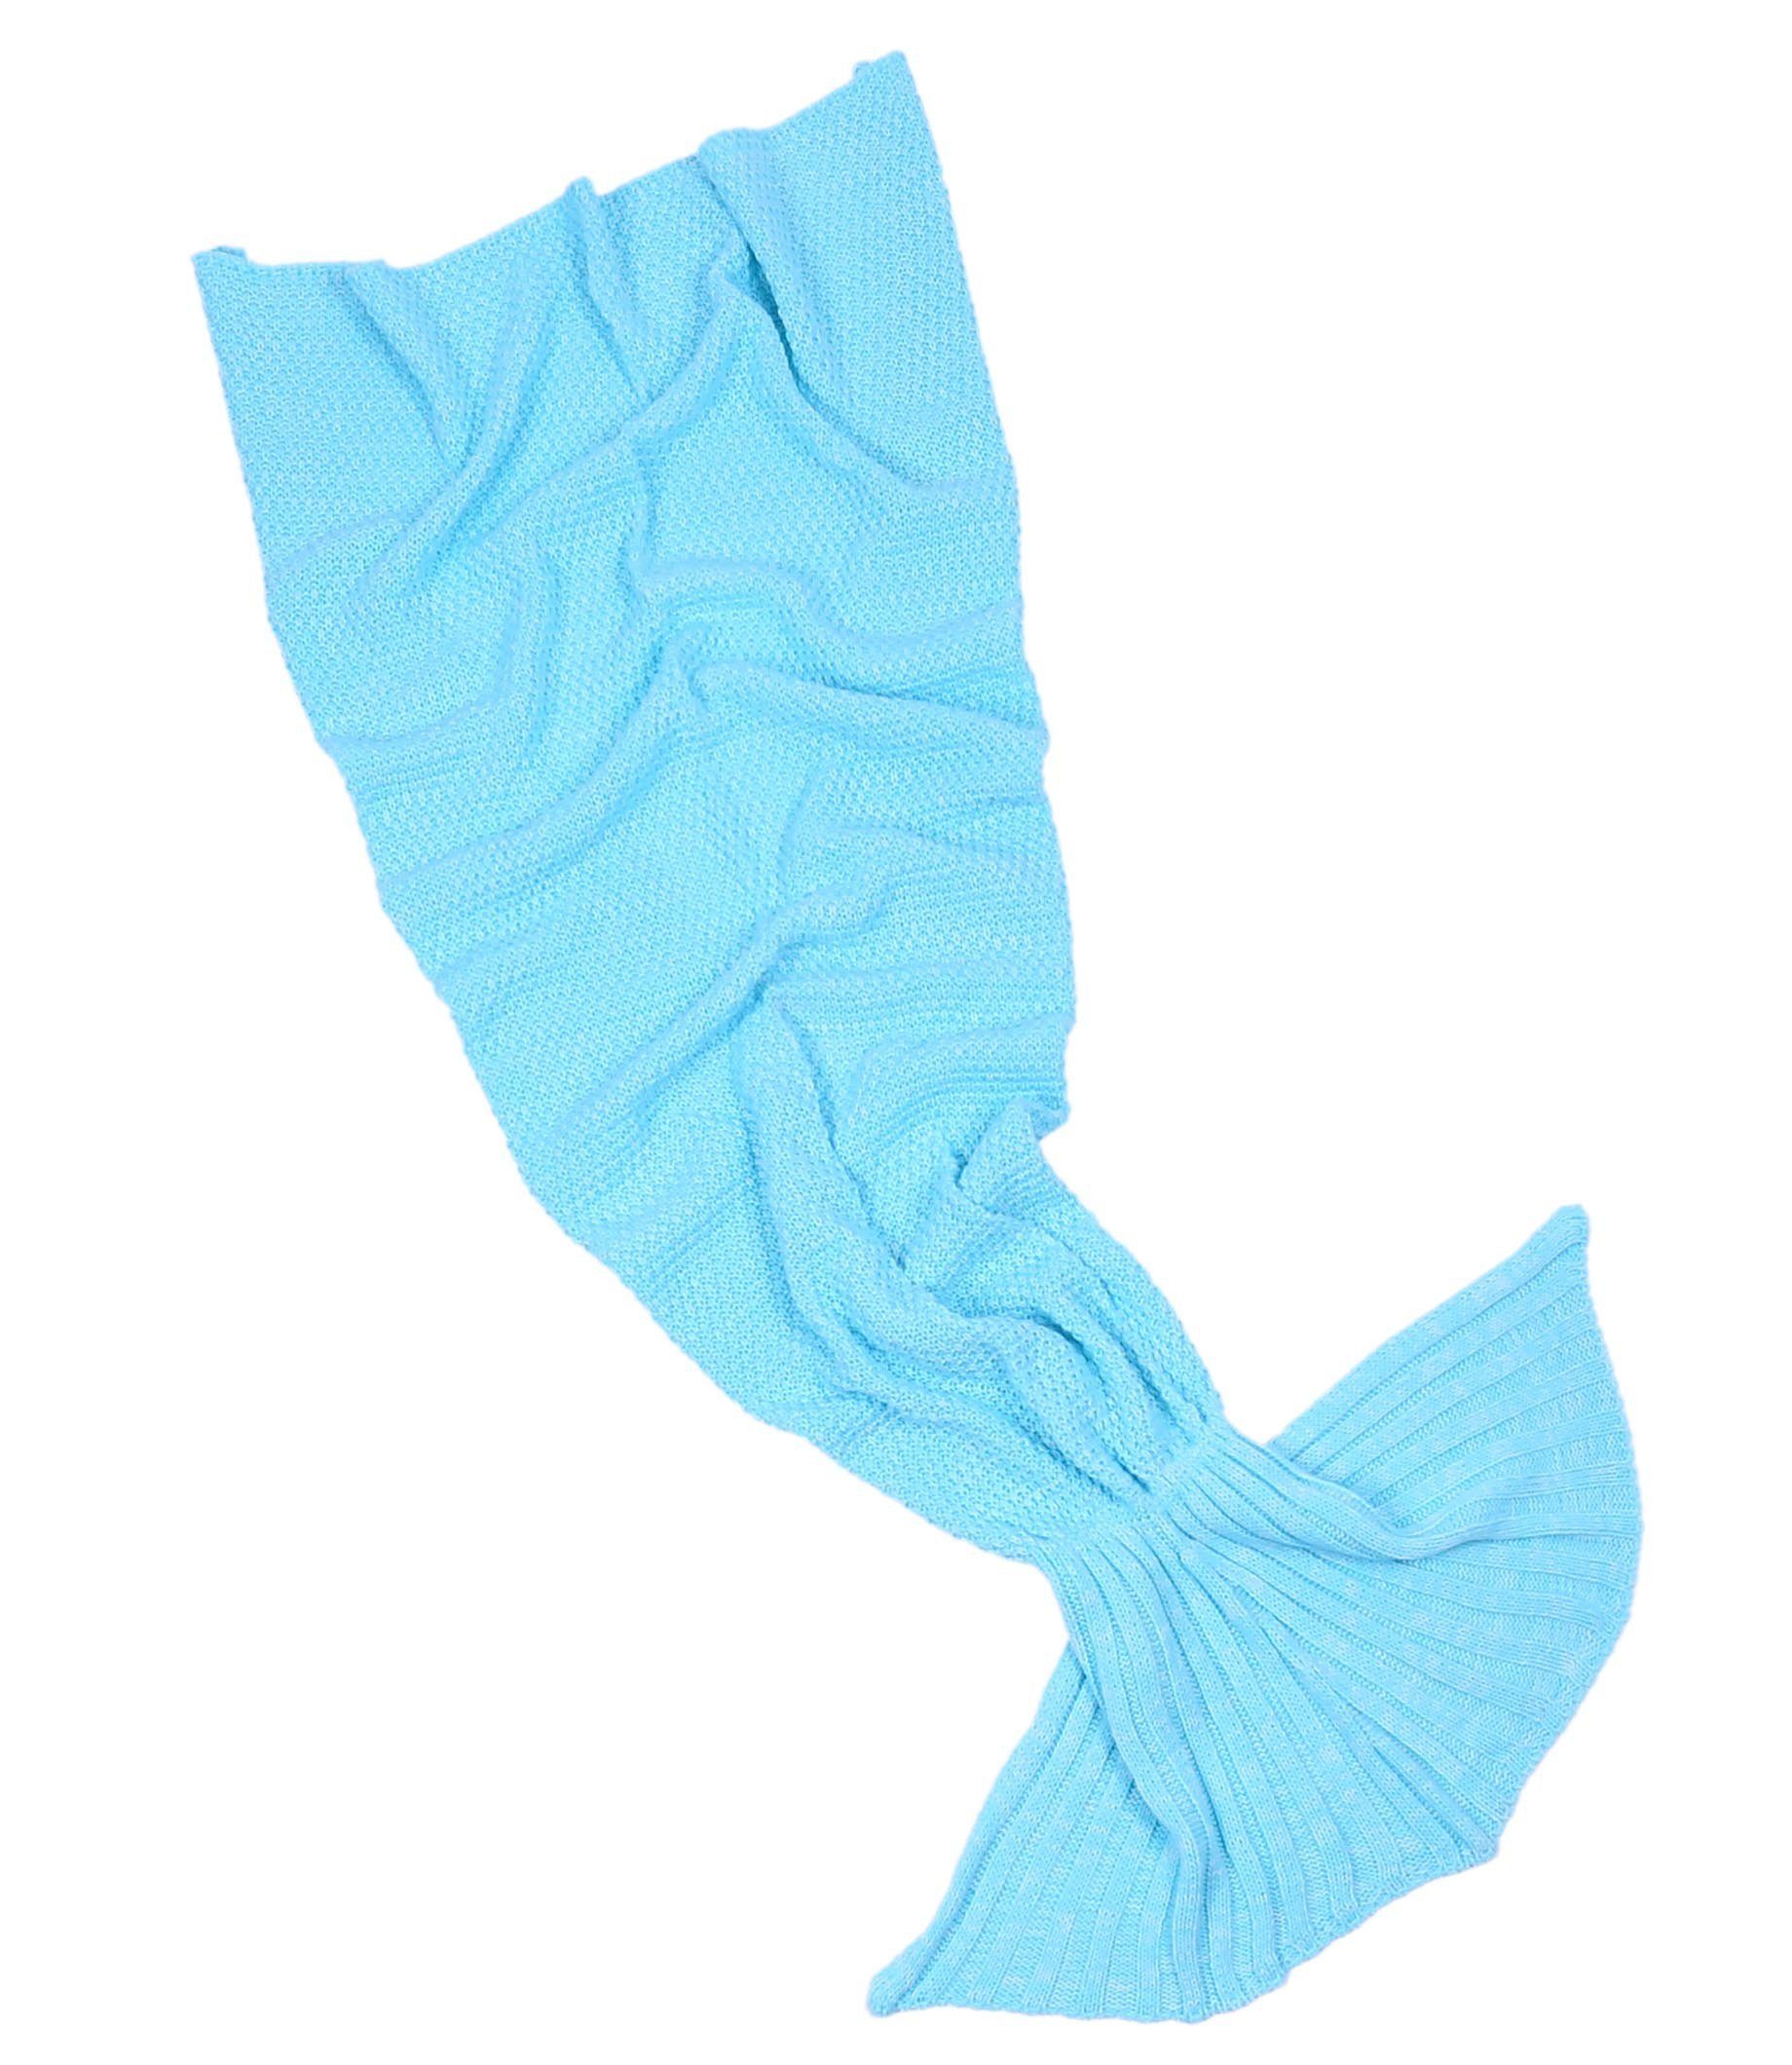 Plaid Warme, blaue Decke - Meerjungfrauschwanz Einheitsgröße, Sarcia.eu